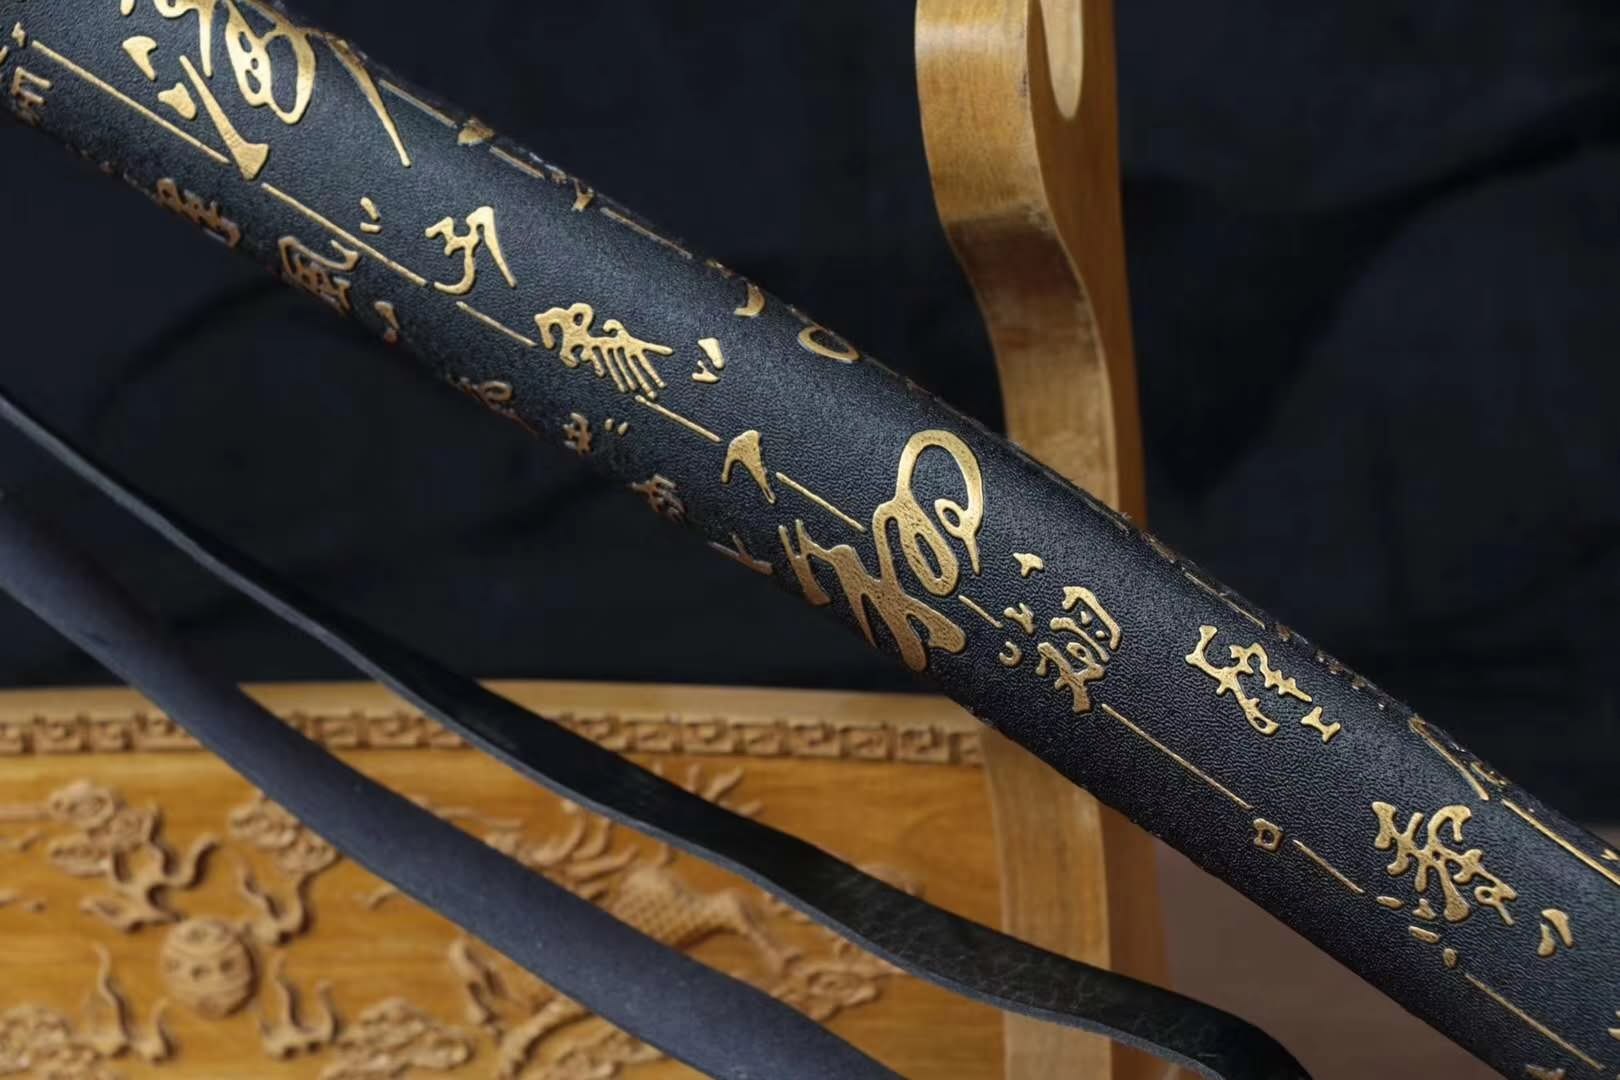 Nihontou katana,High carbon steel burn blade,Leather scabbard - Chinese sword shop